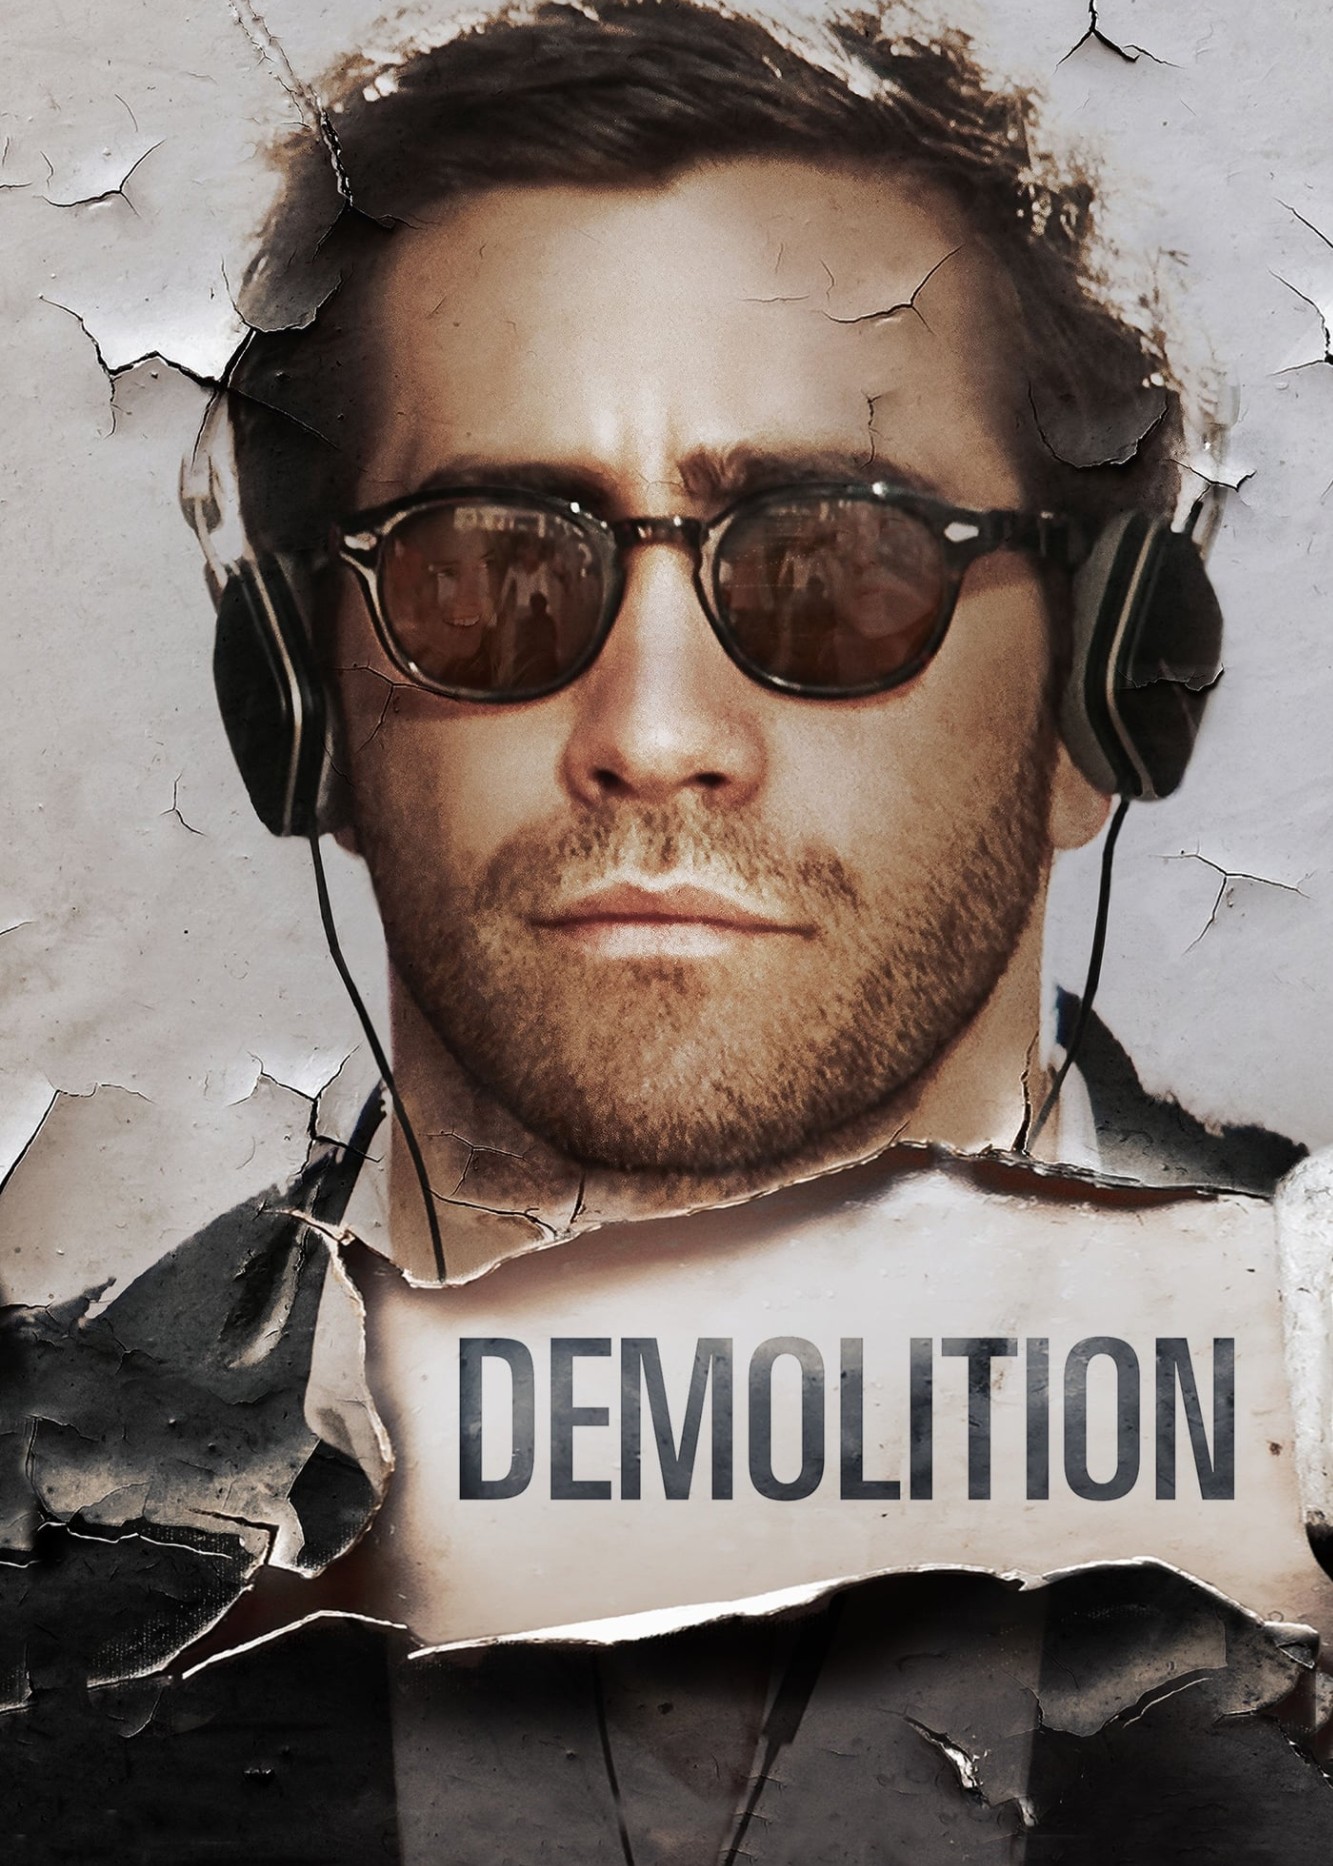 Demolition - Demolition (2015)